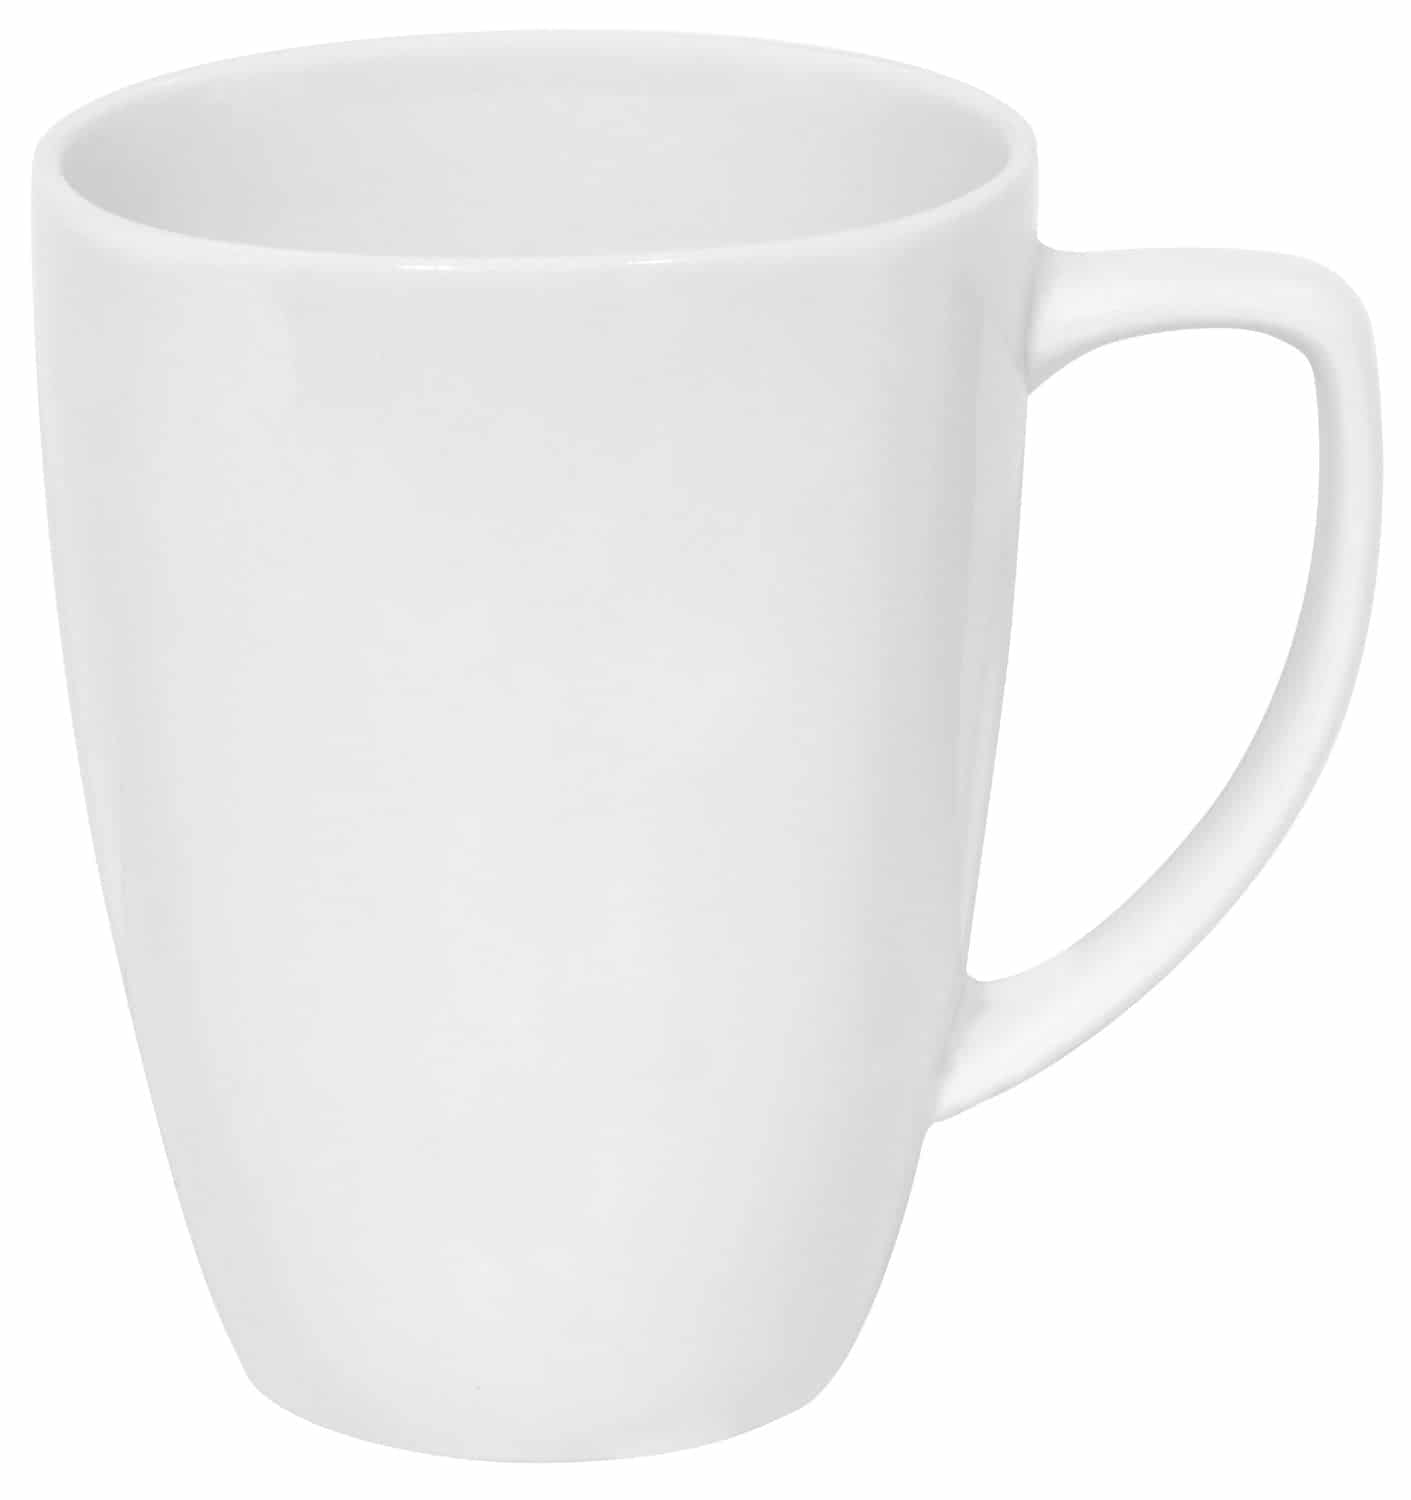 Awesome Crafting Blanks You Can Get on Amazon Prime : Coffee Mug | www.thepinningmama.com